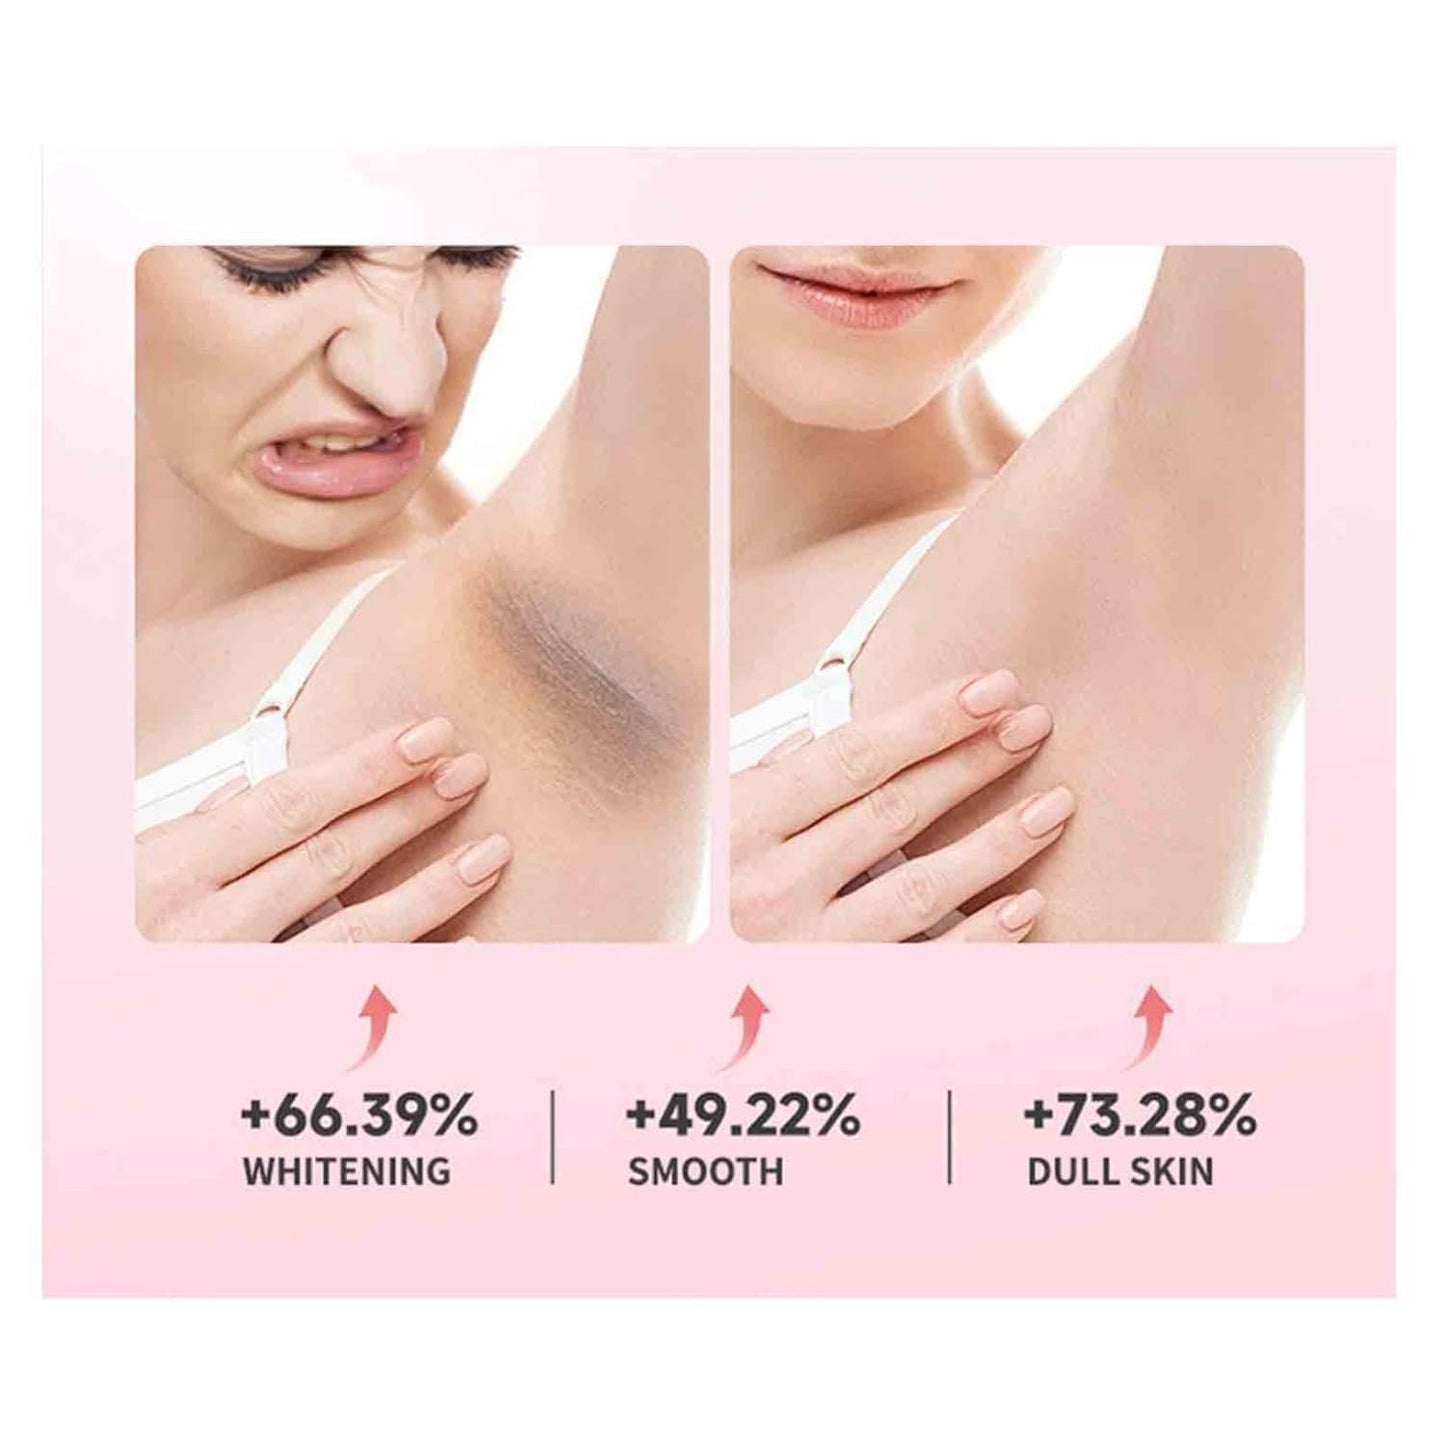 Sakura Gluta Underarm Whitening Cream,Intimate Area Skin Lightening Cream